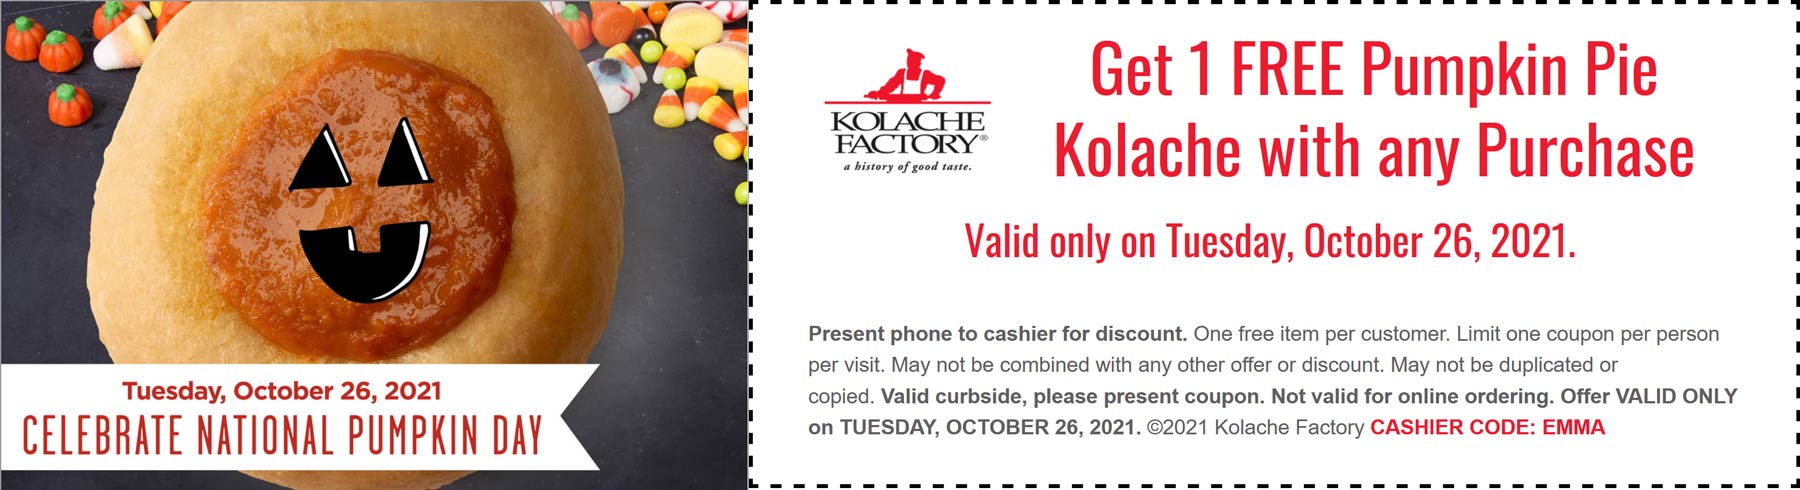 Kolache Factory restaurants Coupon  Free pumpkin pie kolache cookie with any purchase Tuesday at Kolache Factory #kolachefactory 